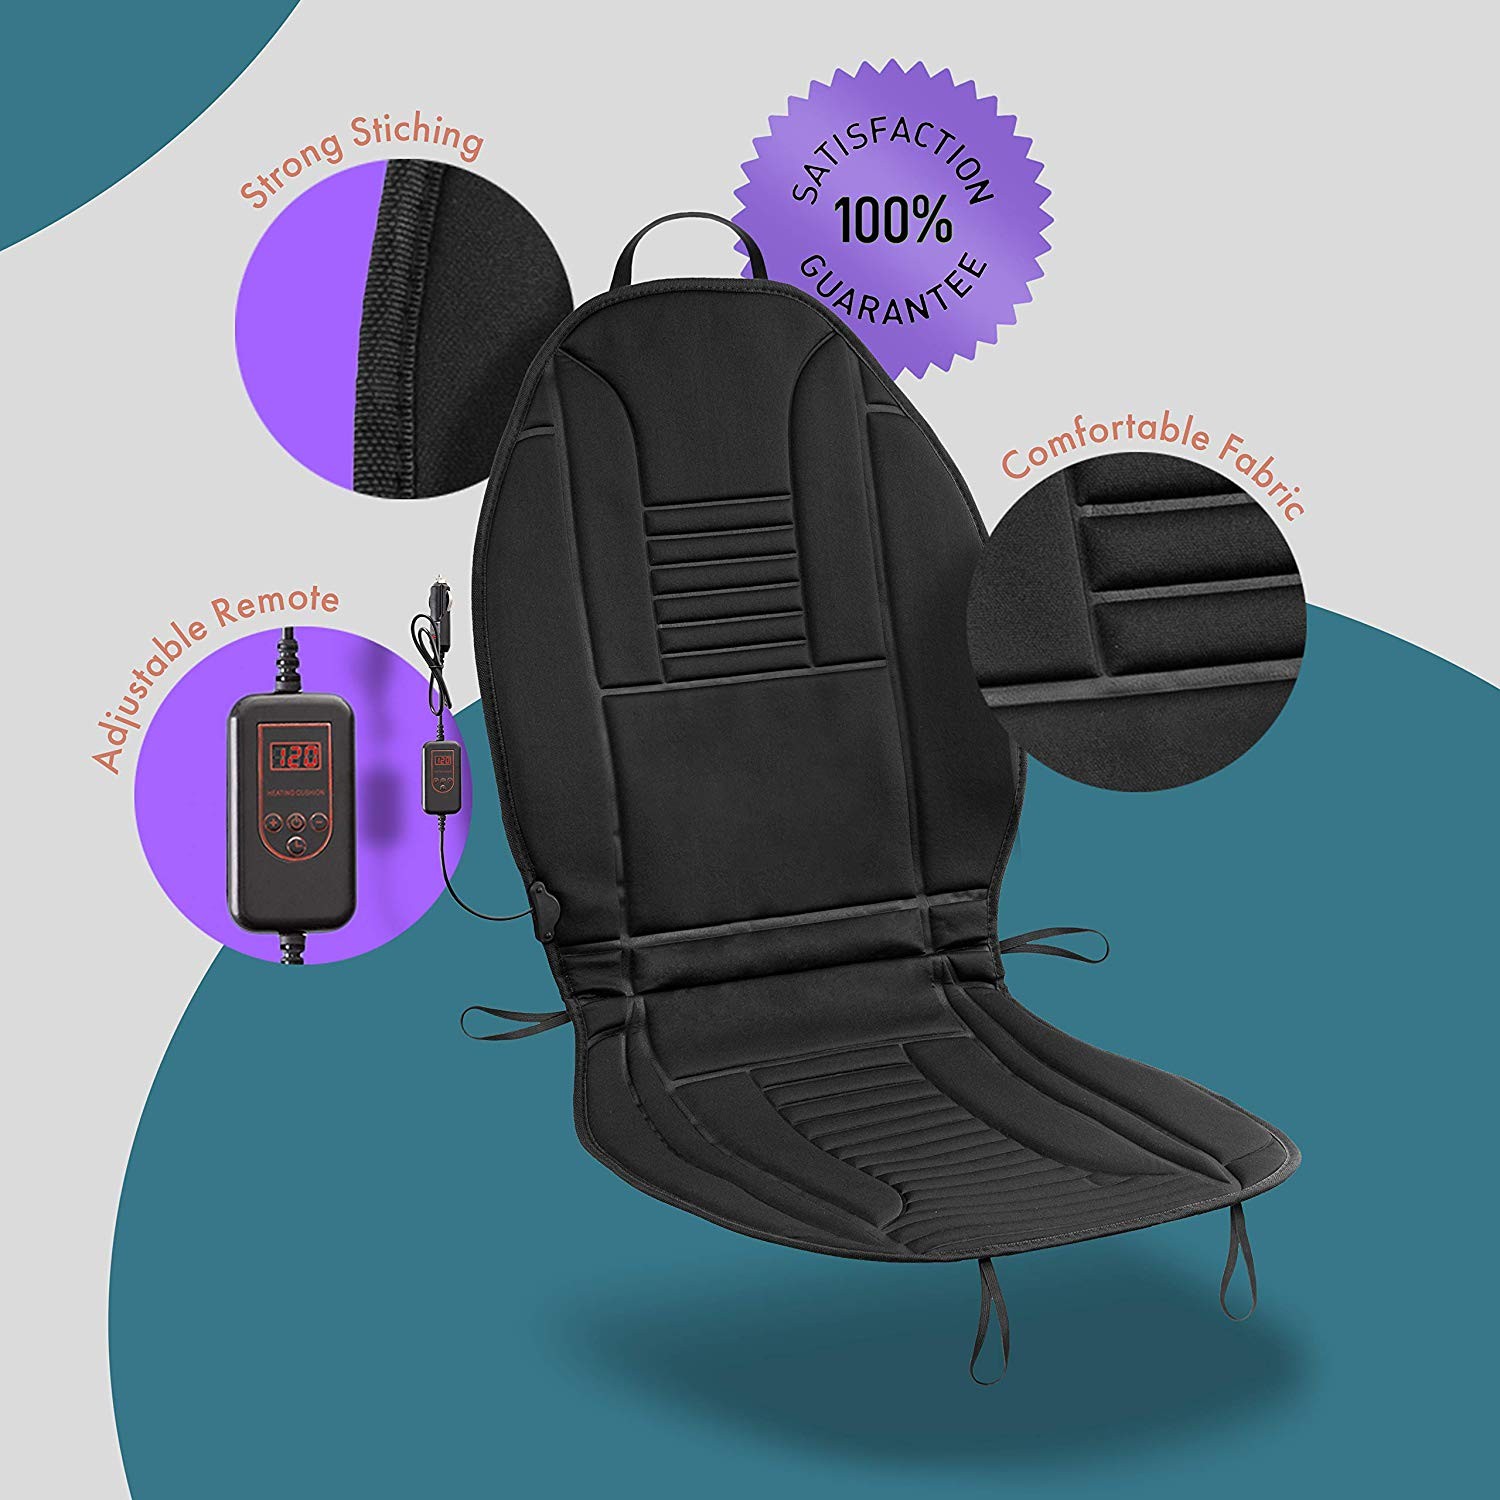  Zone Tech Cooling Car Seat Cushion - Black 12V